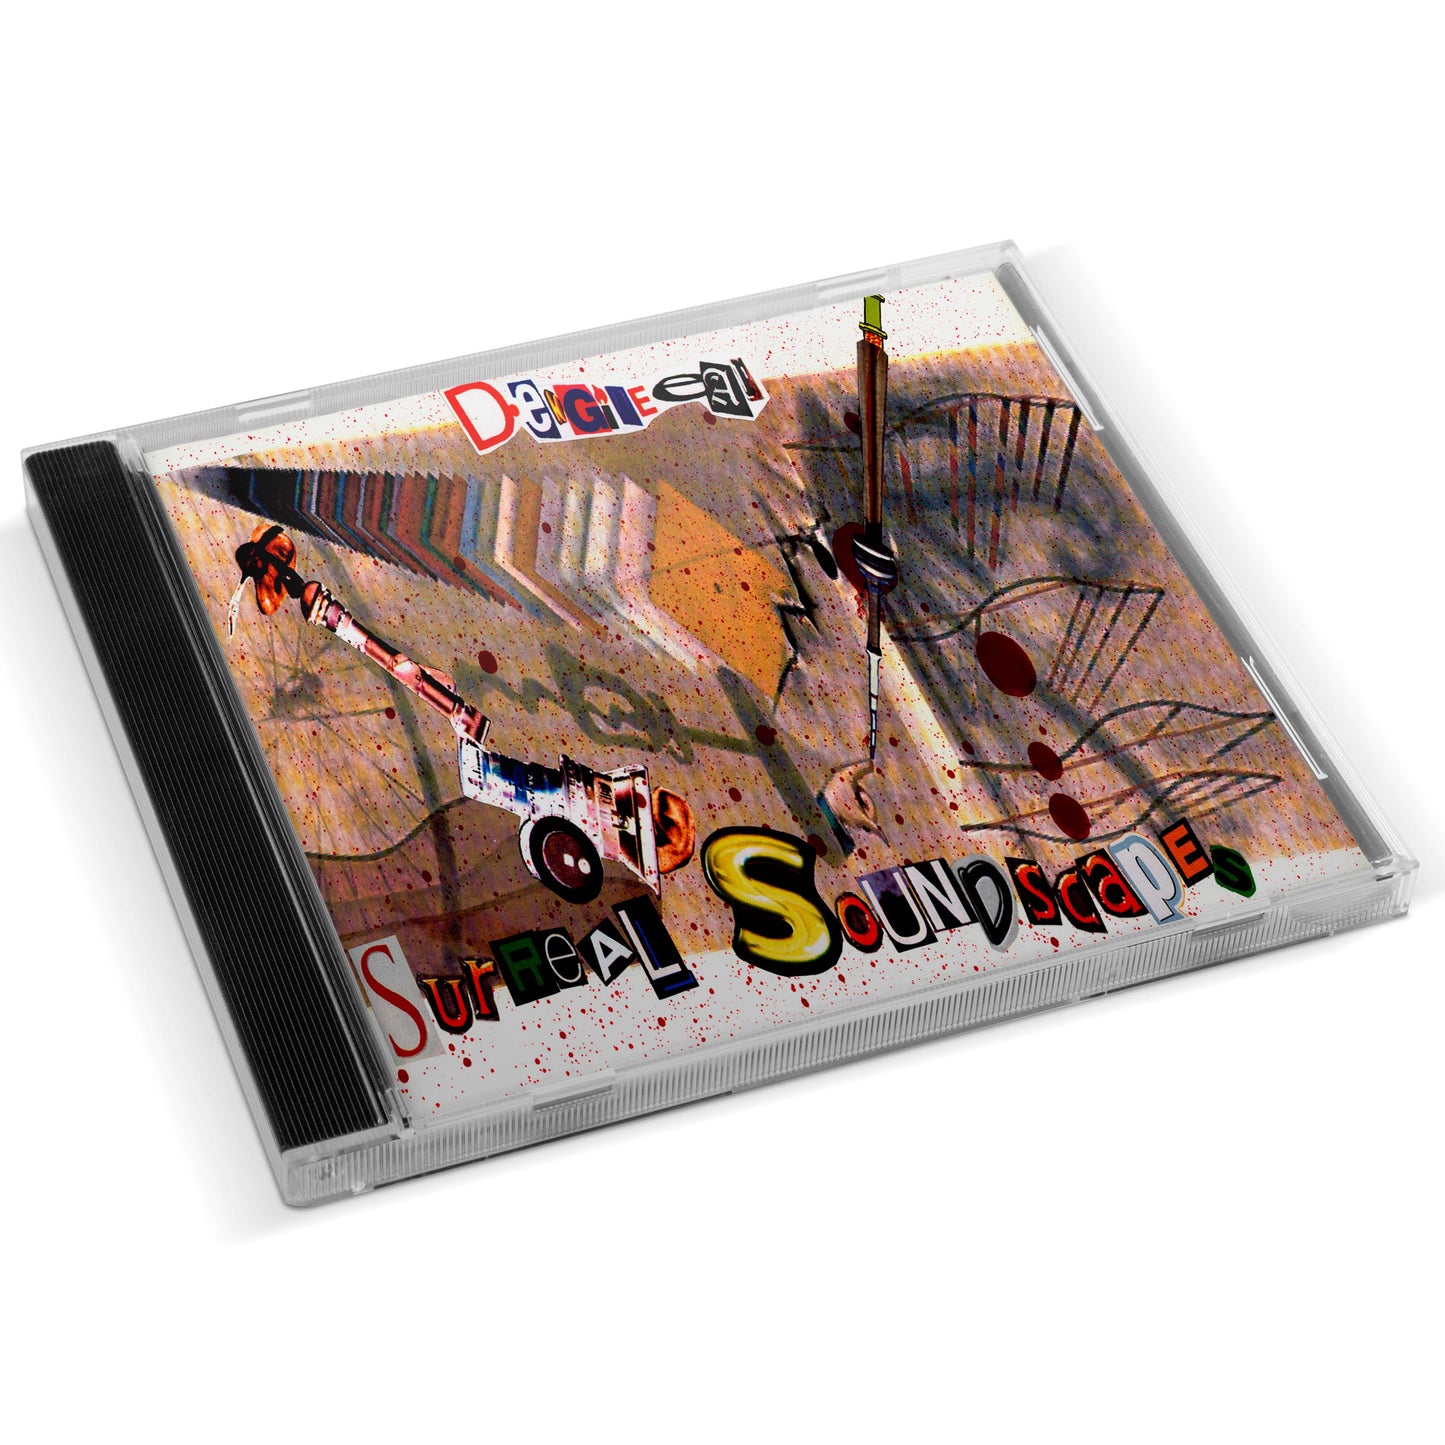 D.Engine Ear - Surreal Soundscapes CD